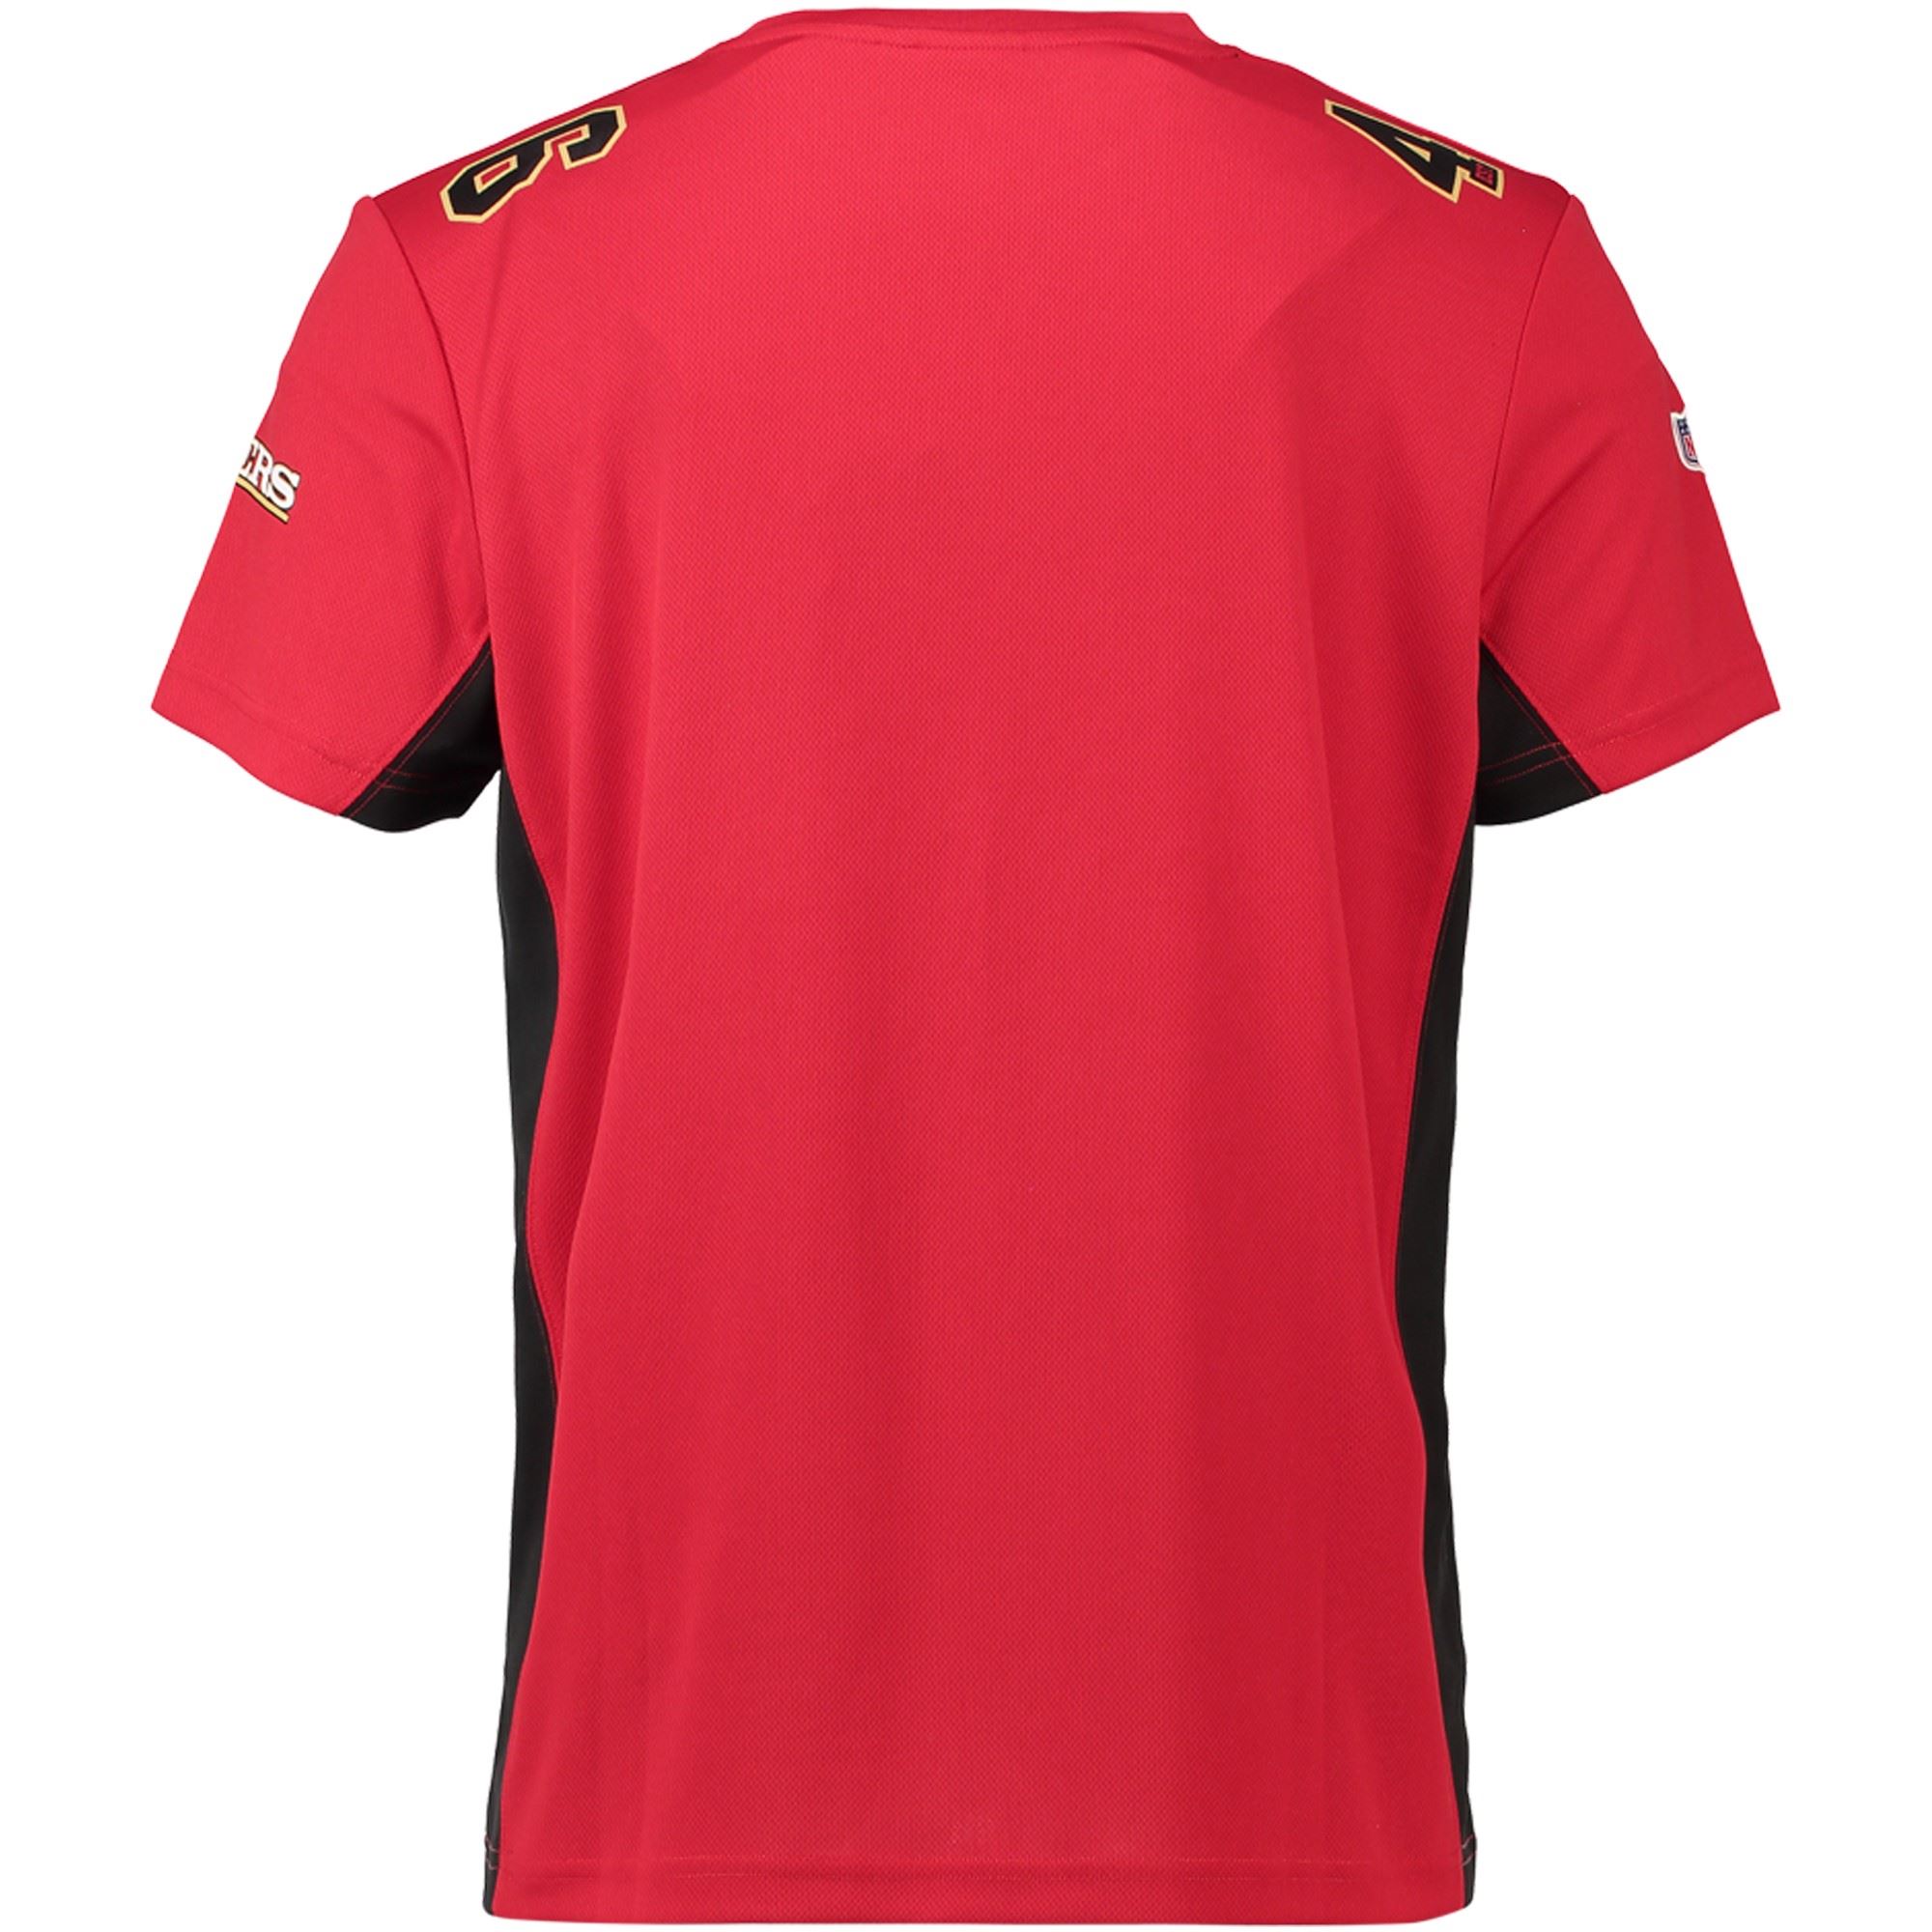 San Francisco 49ers NFL Players Poly Mesh Red T-Shirt Fanatics